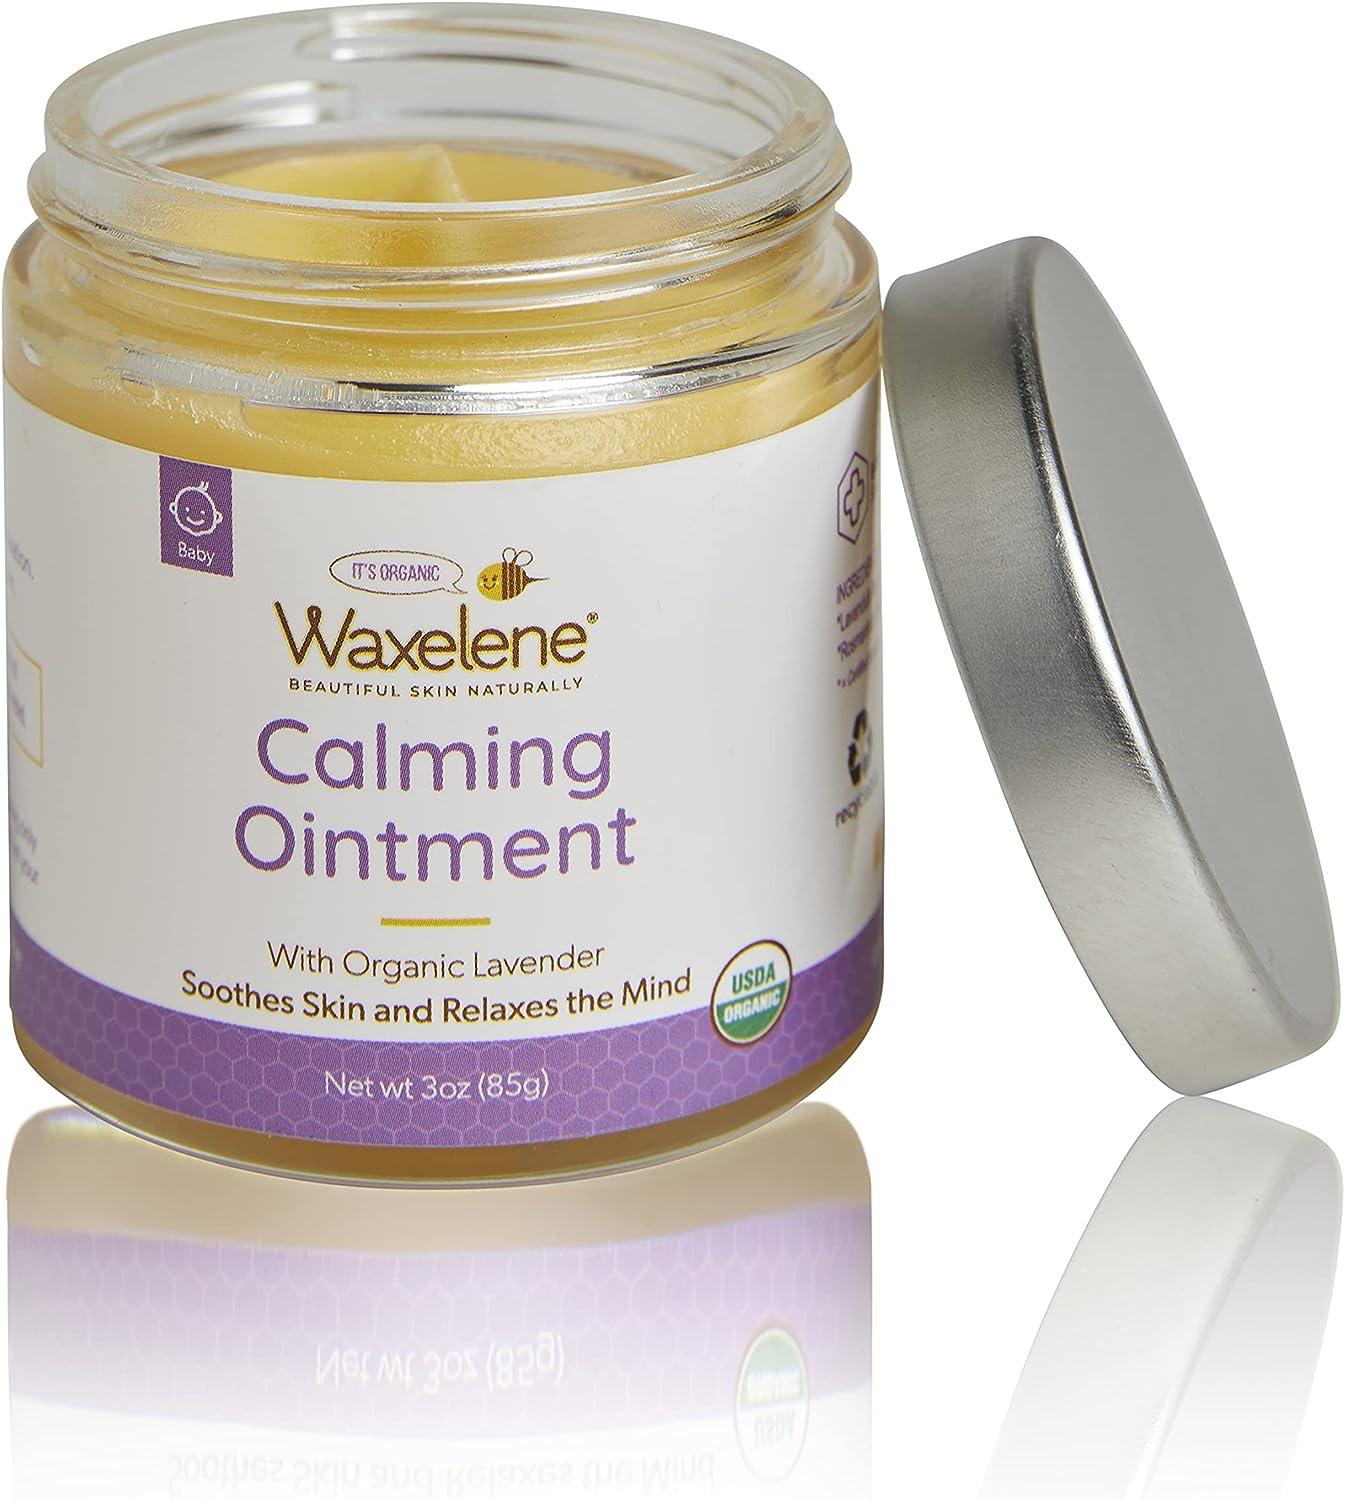 Waxelene Calming Ointment Organic Lavender Hilaria Baldwin